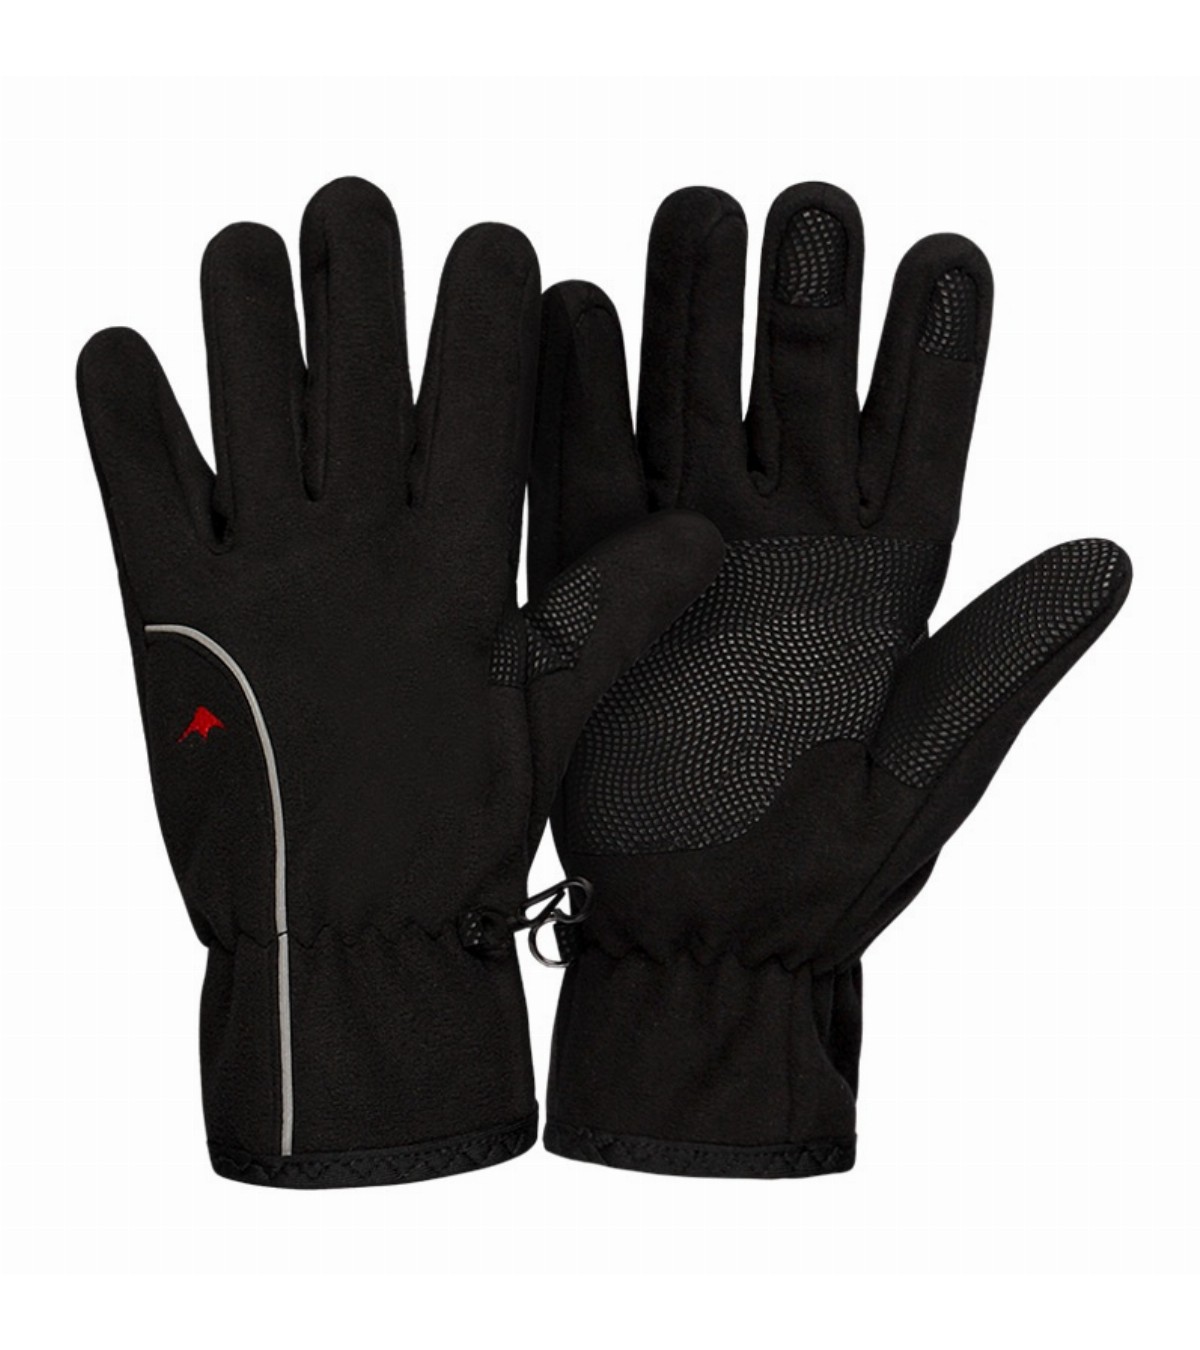 Montagne y vende para hombre mujer: guantes antideslizante, guantes técnicos, guantes running, guantes de abrigo, guantes urbanos, en Argentina.